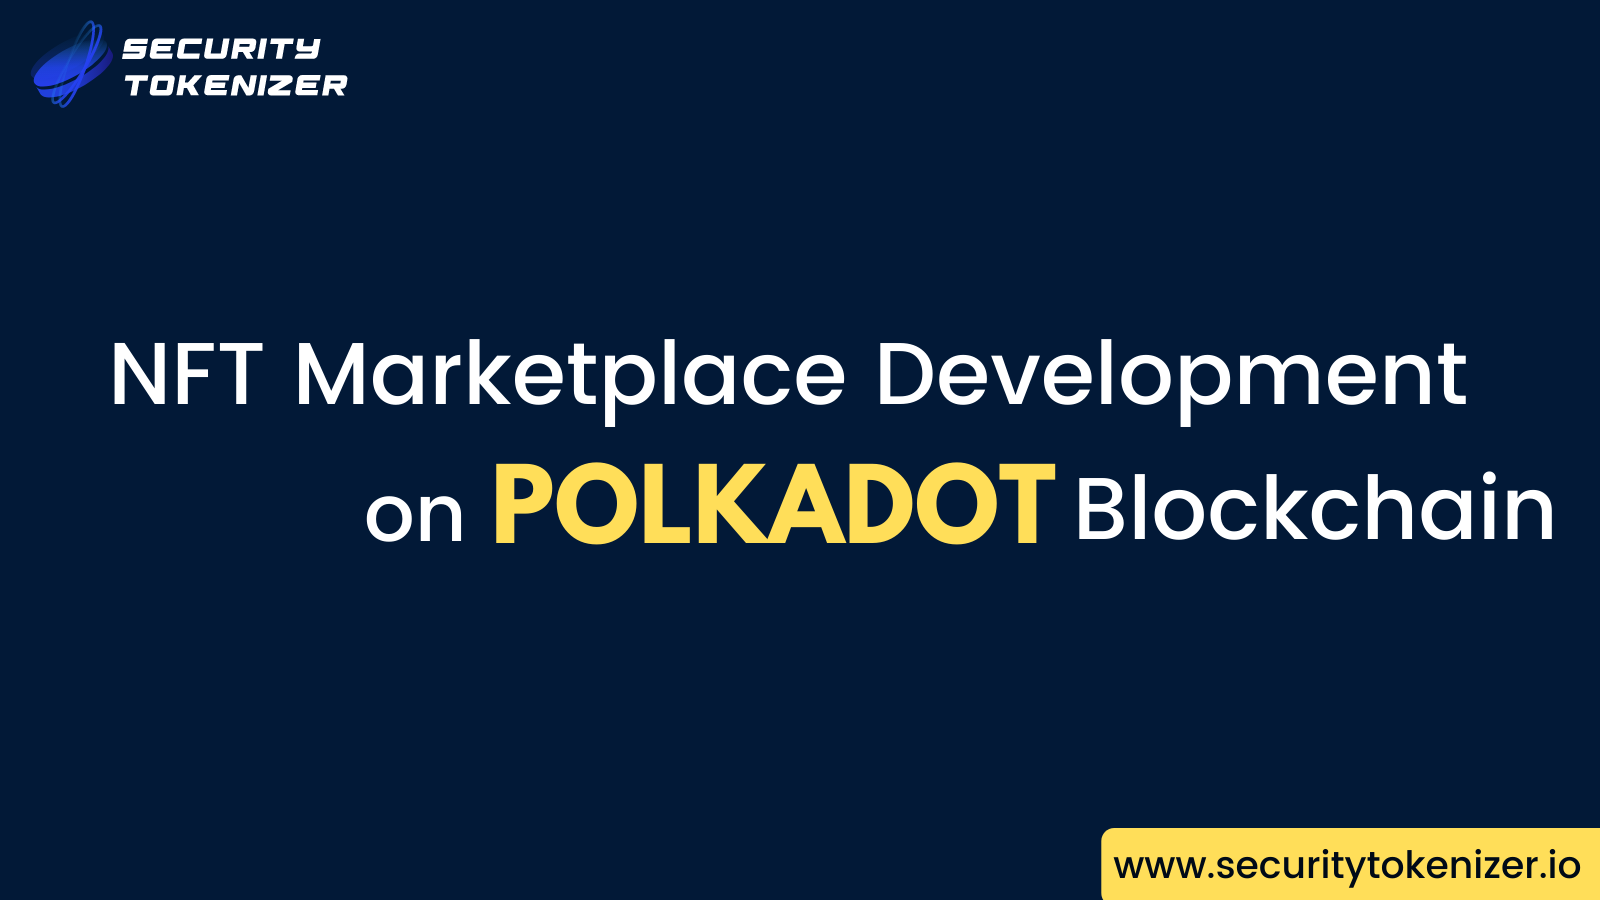 NFT Marketplace Development on Polkadot Blockchain